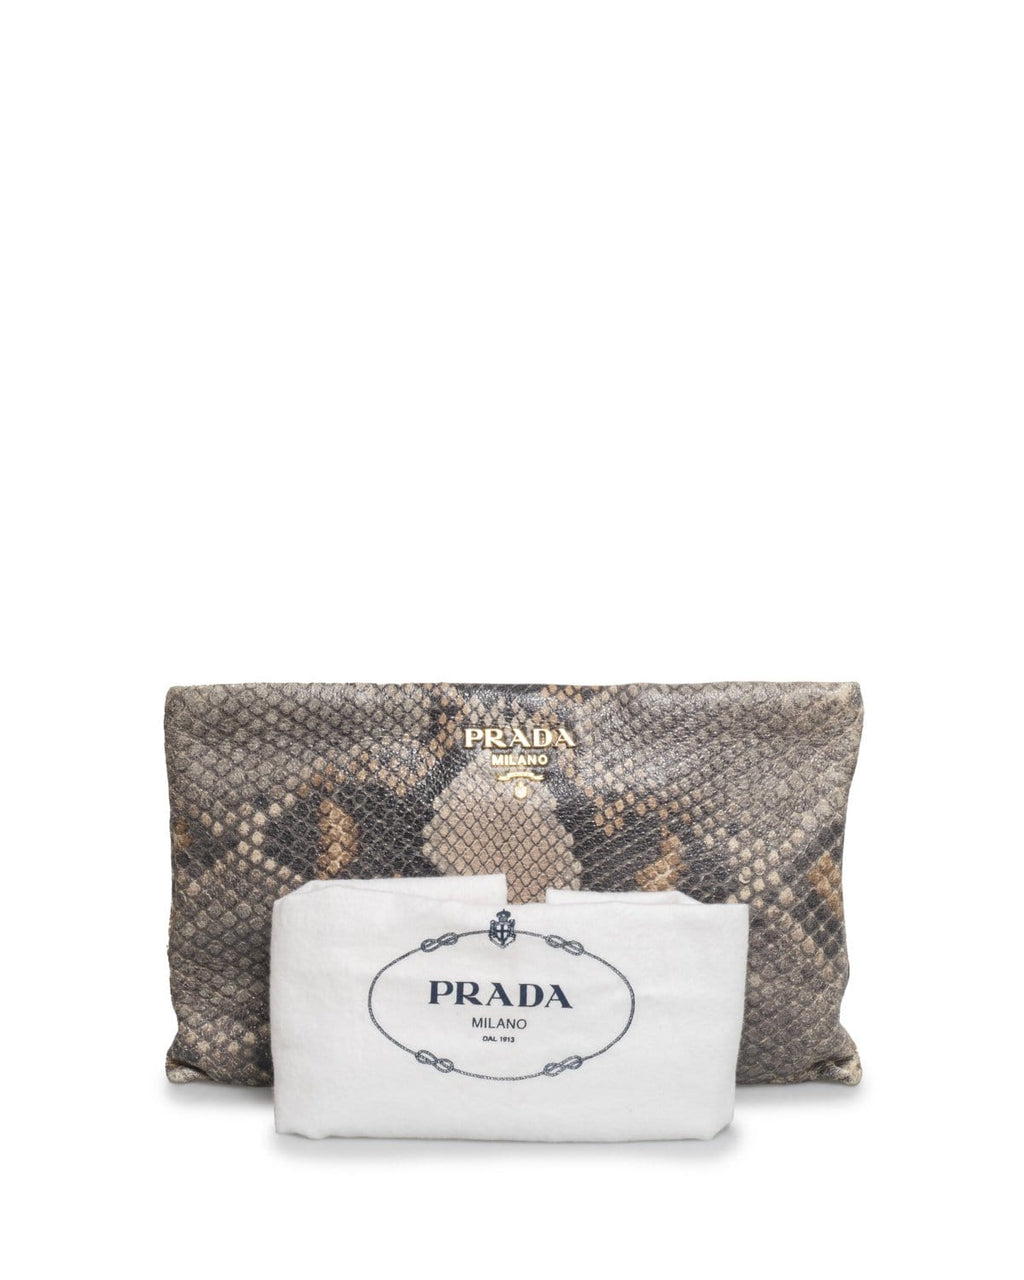 PRADA Clutch Bags for Women | Authenticity Guaranteed | eBay